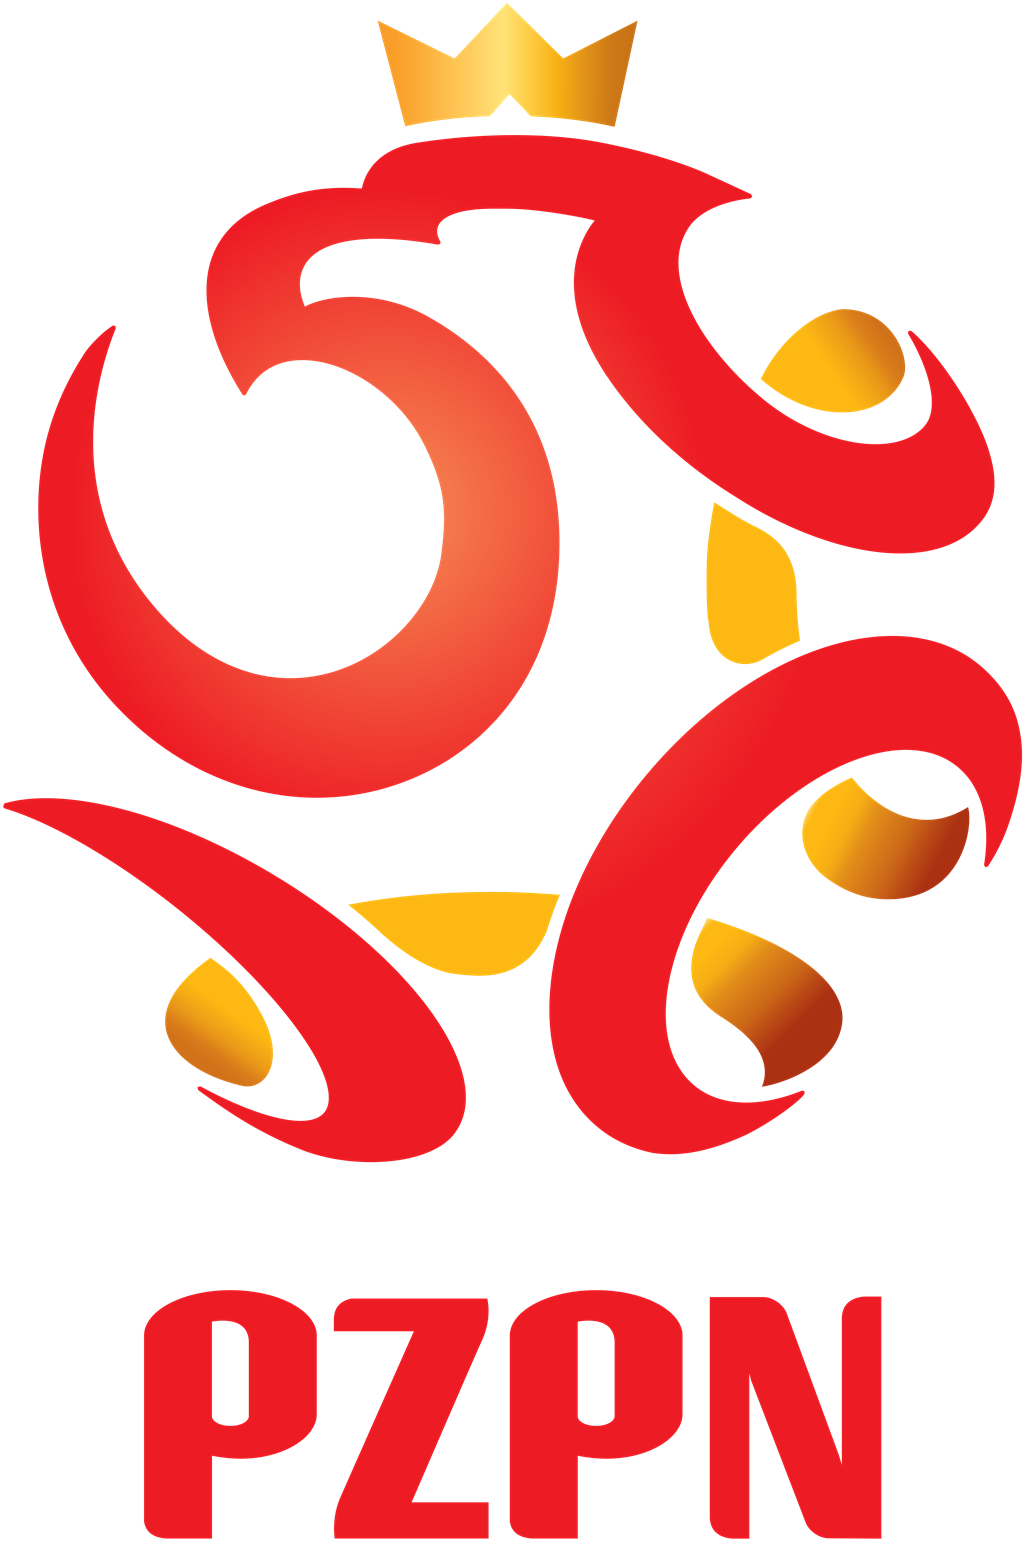 Poland national football team logotype, transparent .png, medium, large